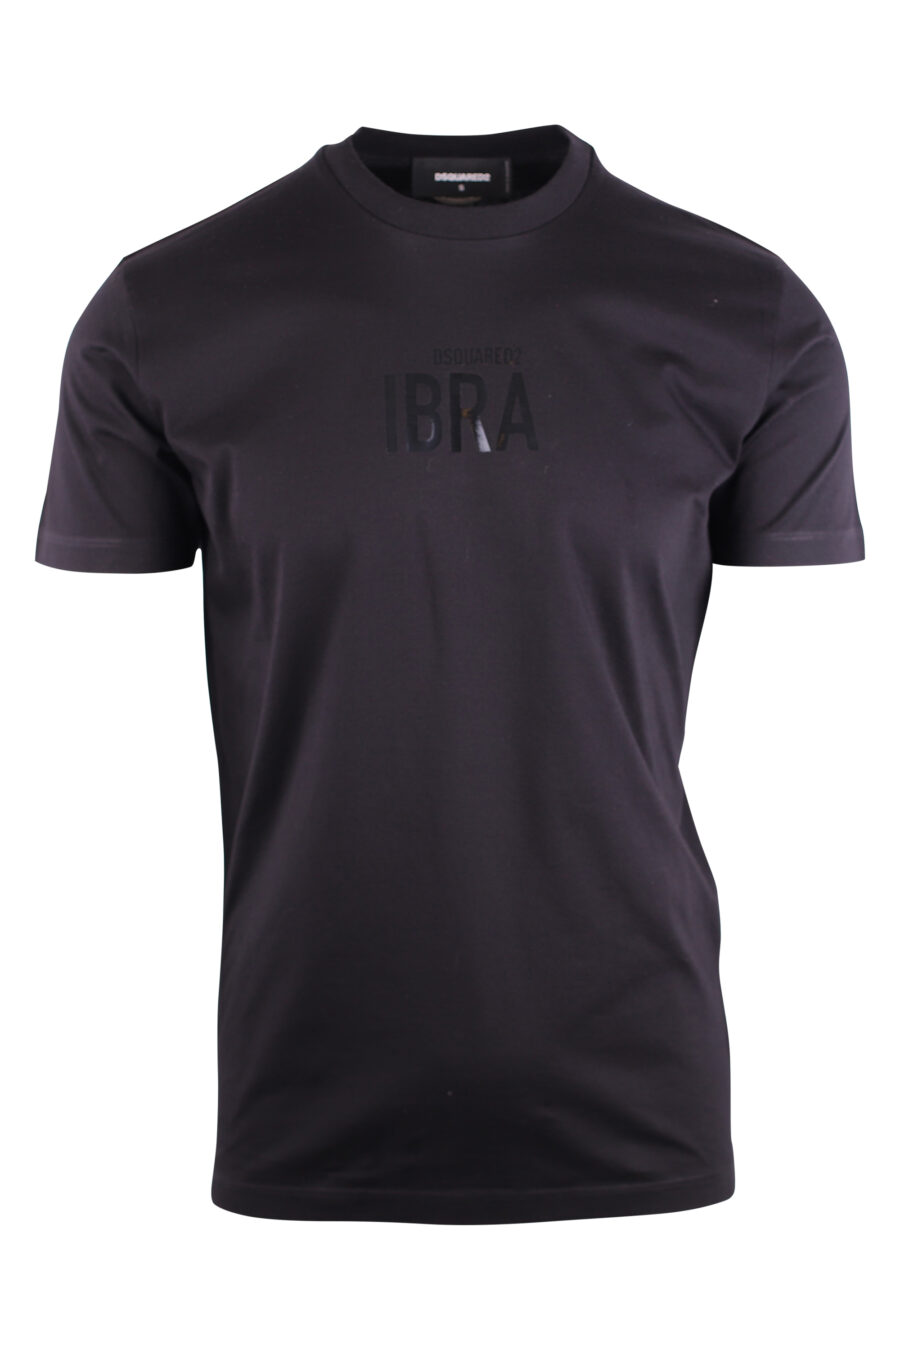 Black T-shirt with monochrome "ibra" logo - IMG 3109